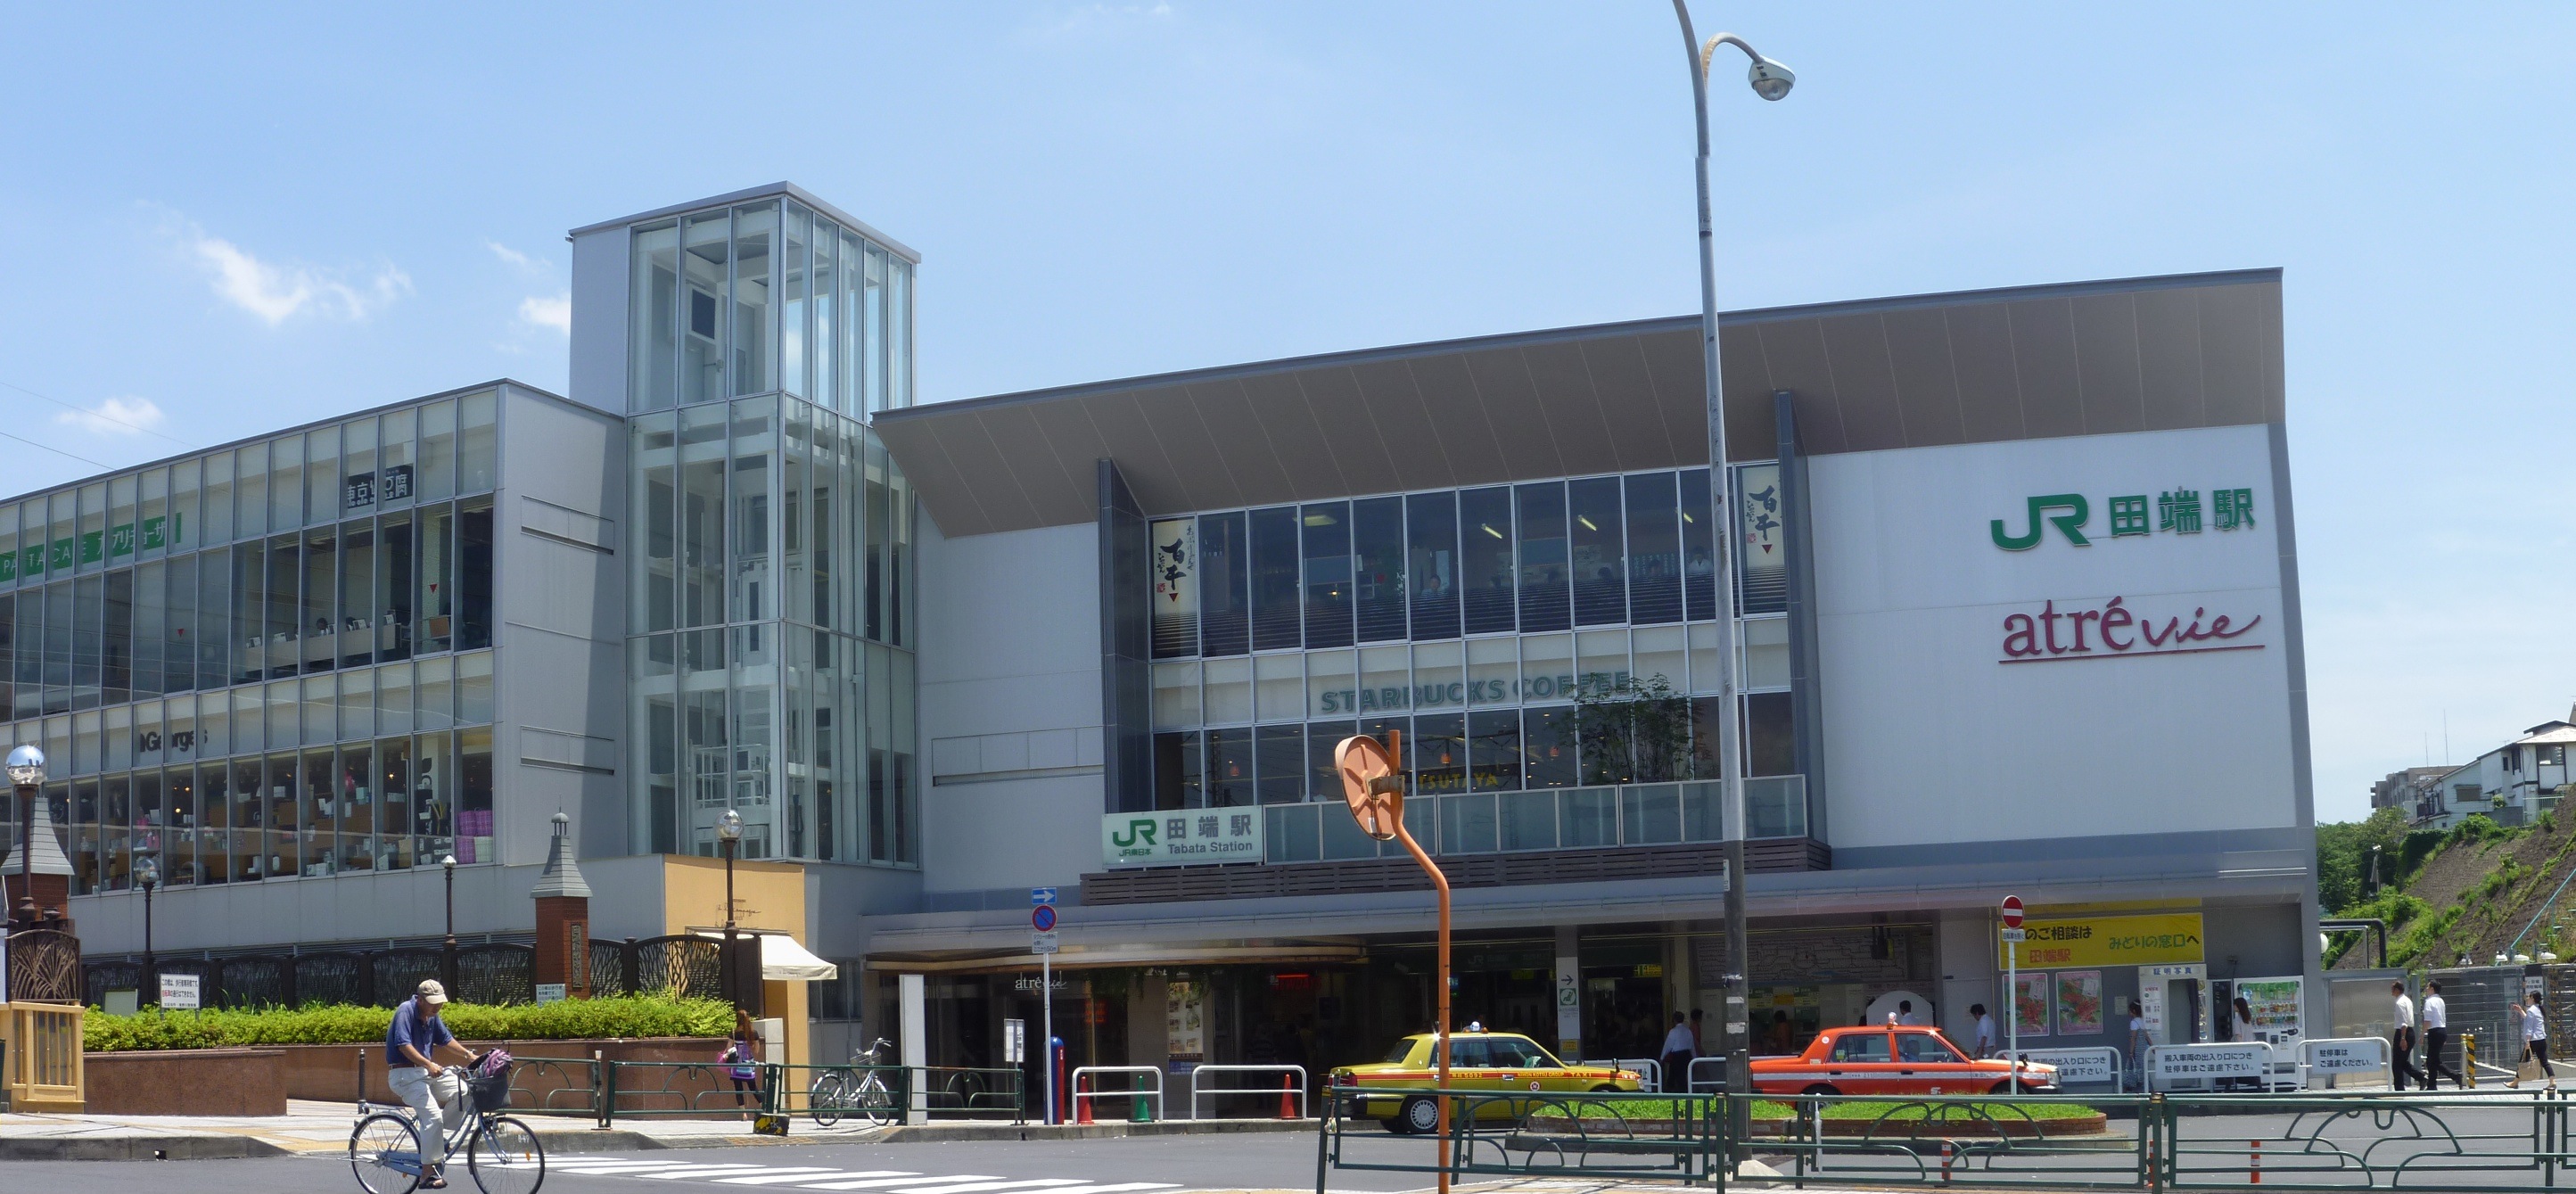 Tachikawa-Kita Station - Wikipedia